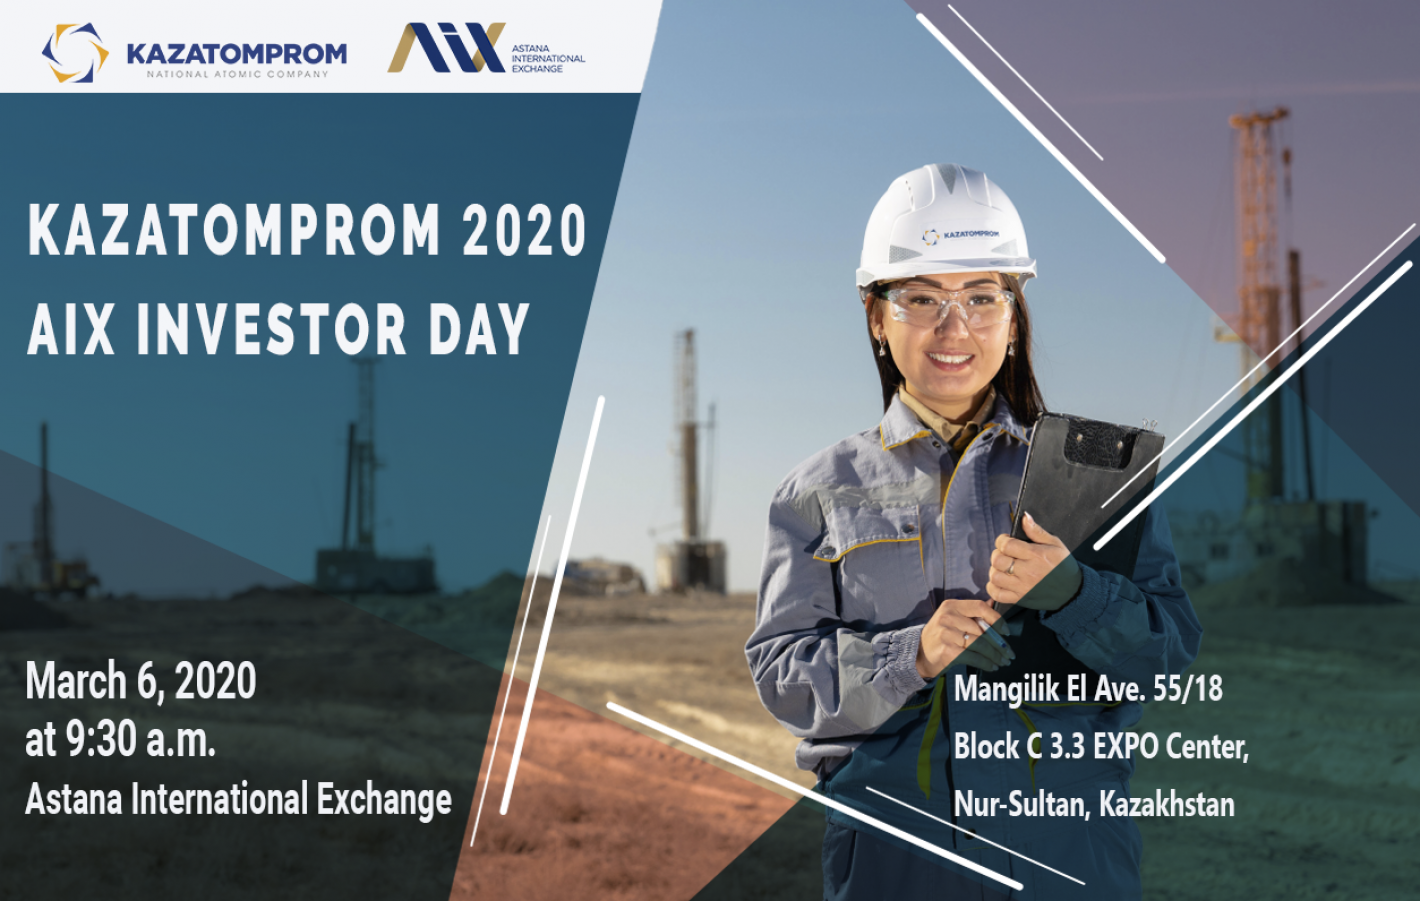 Kazatomprom’s 2020 AIX Investor Day